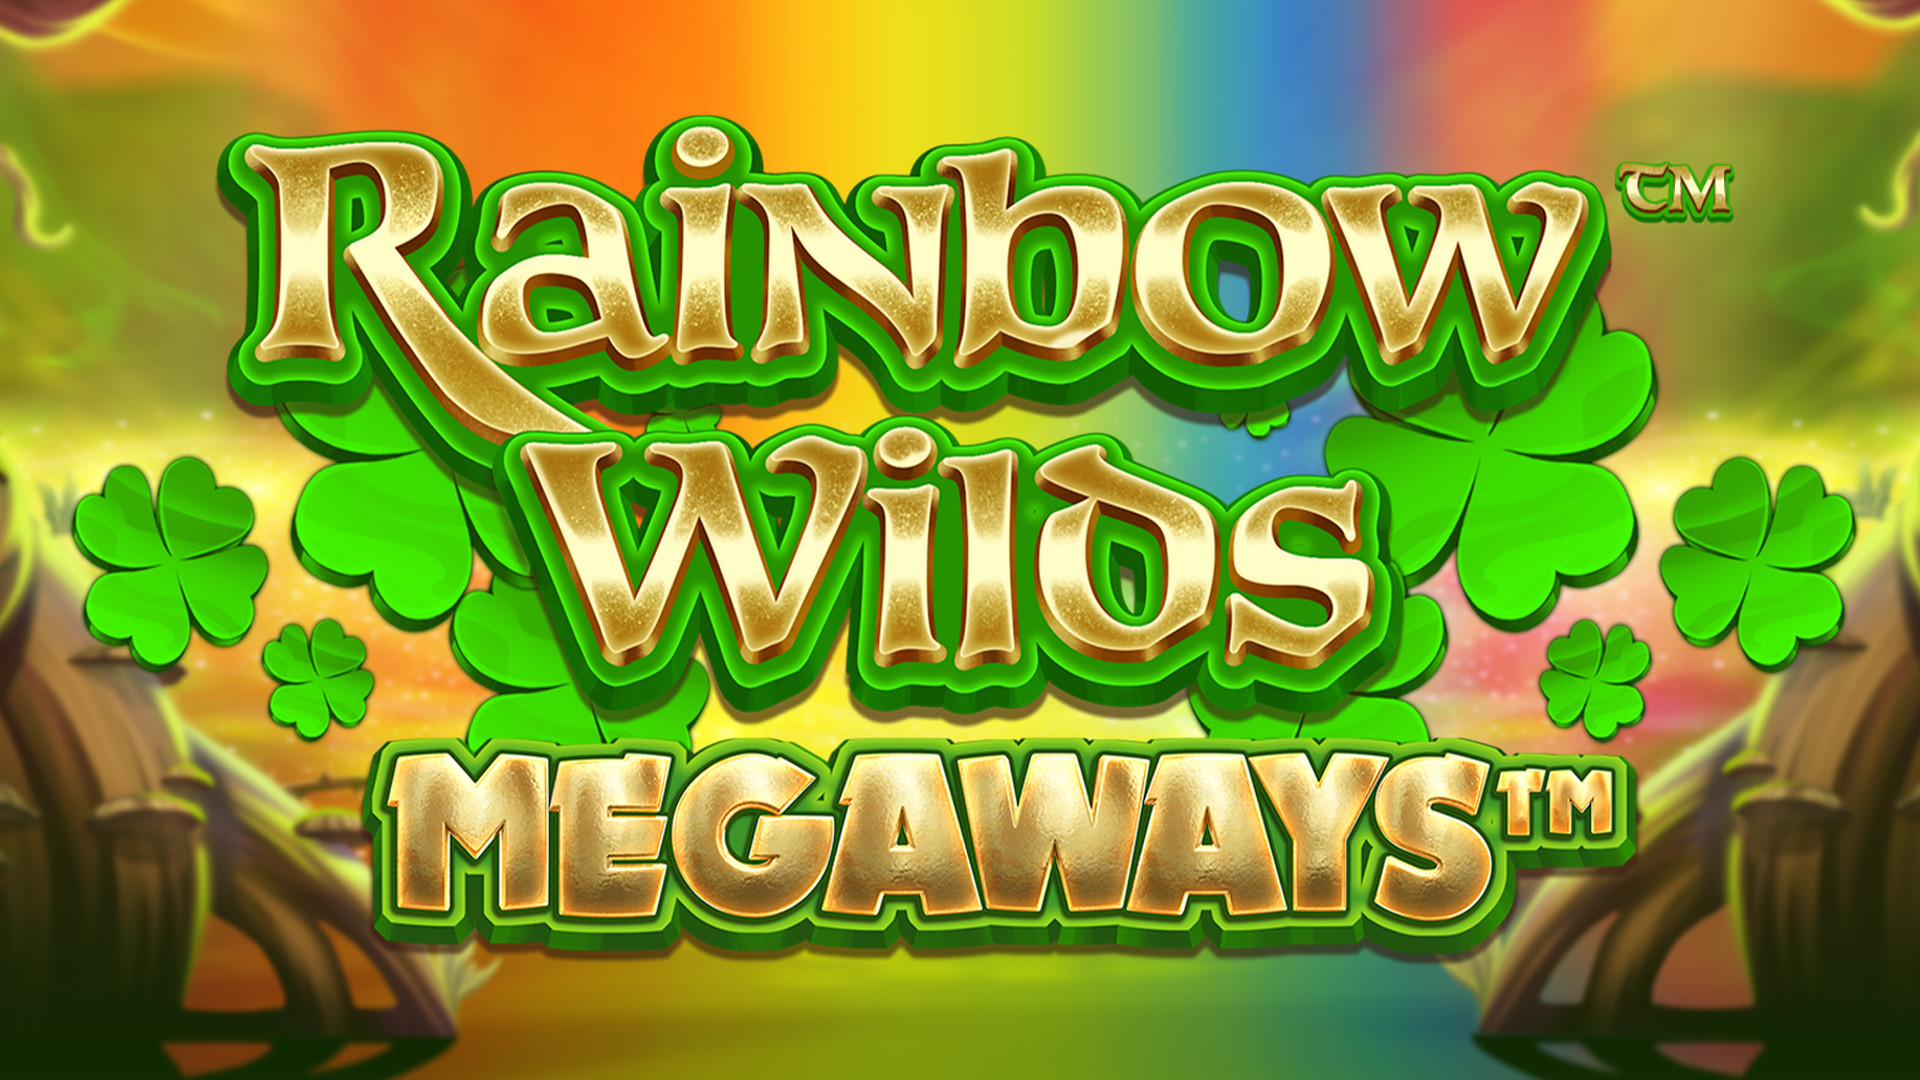 Rainbow Wilds MEGAWAYS